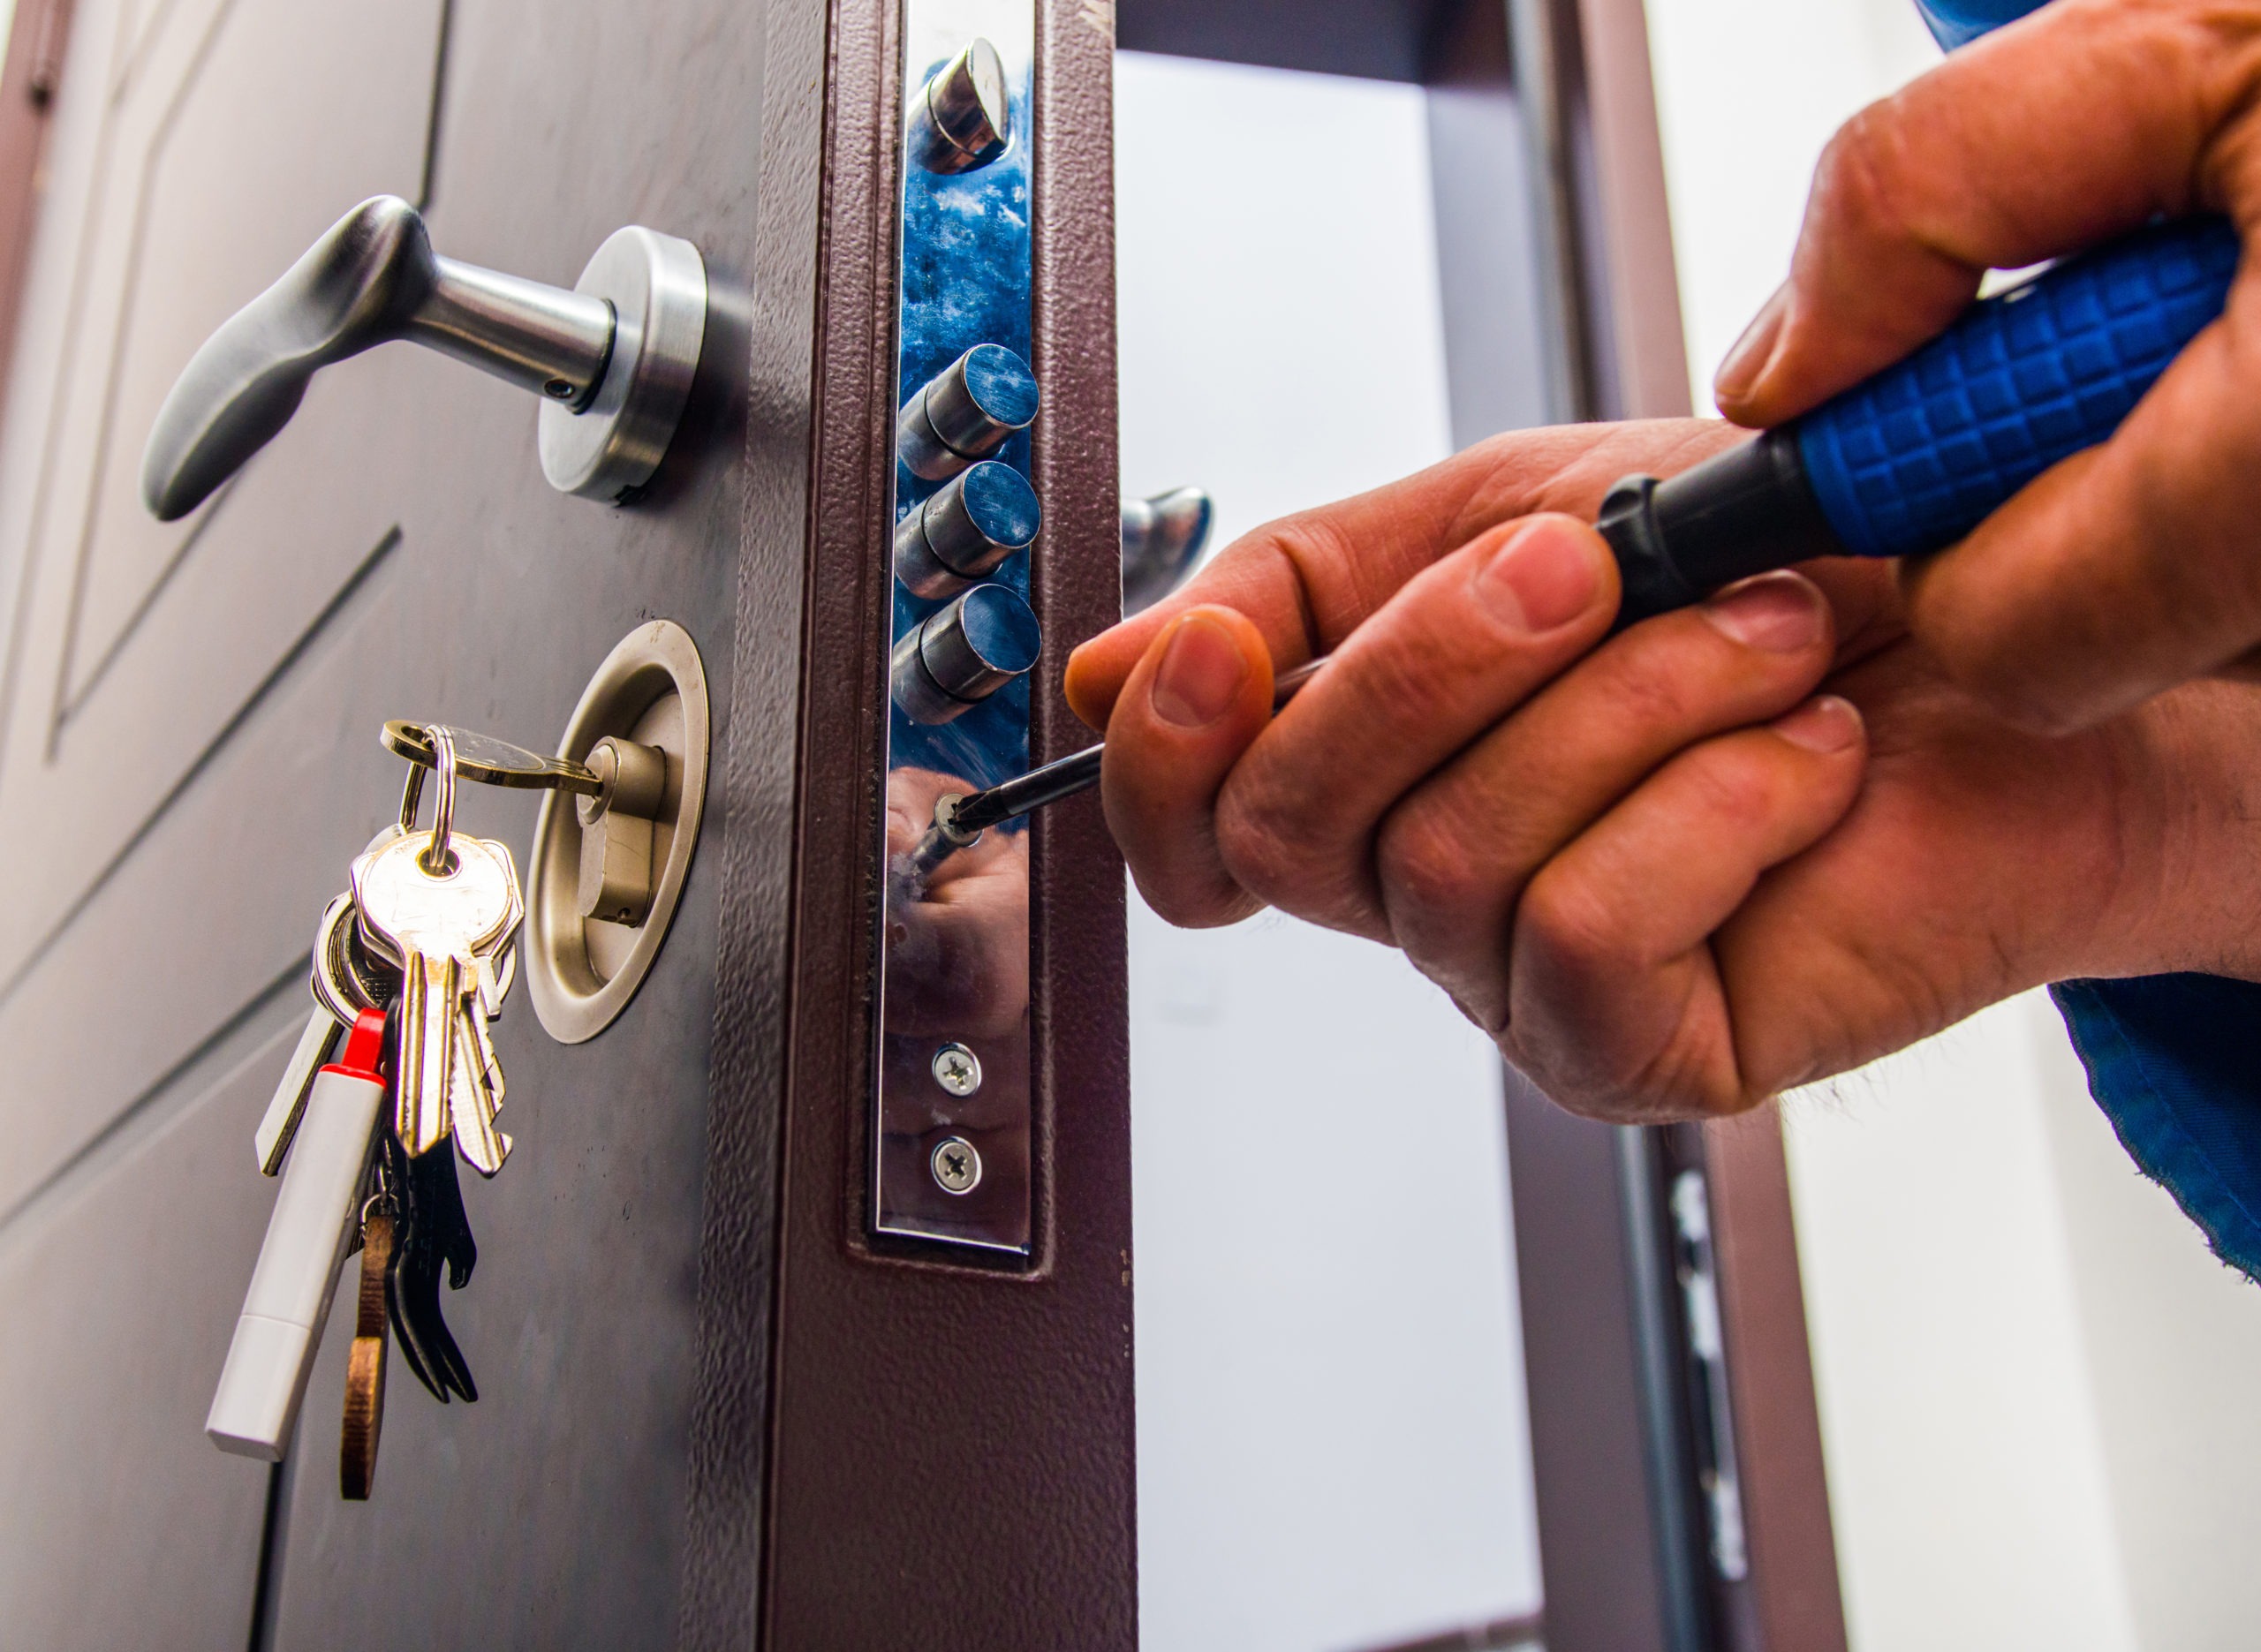 Handyman repairs the door lock